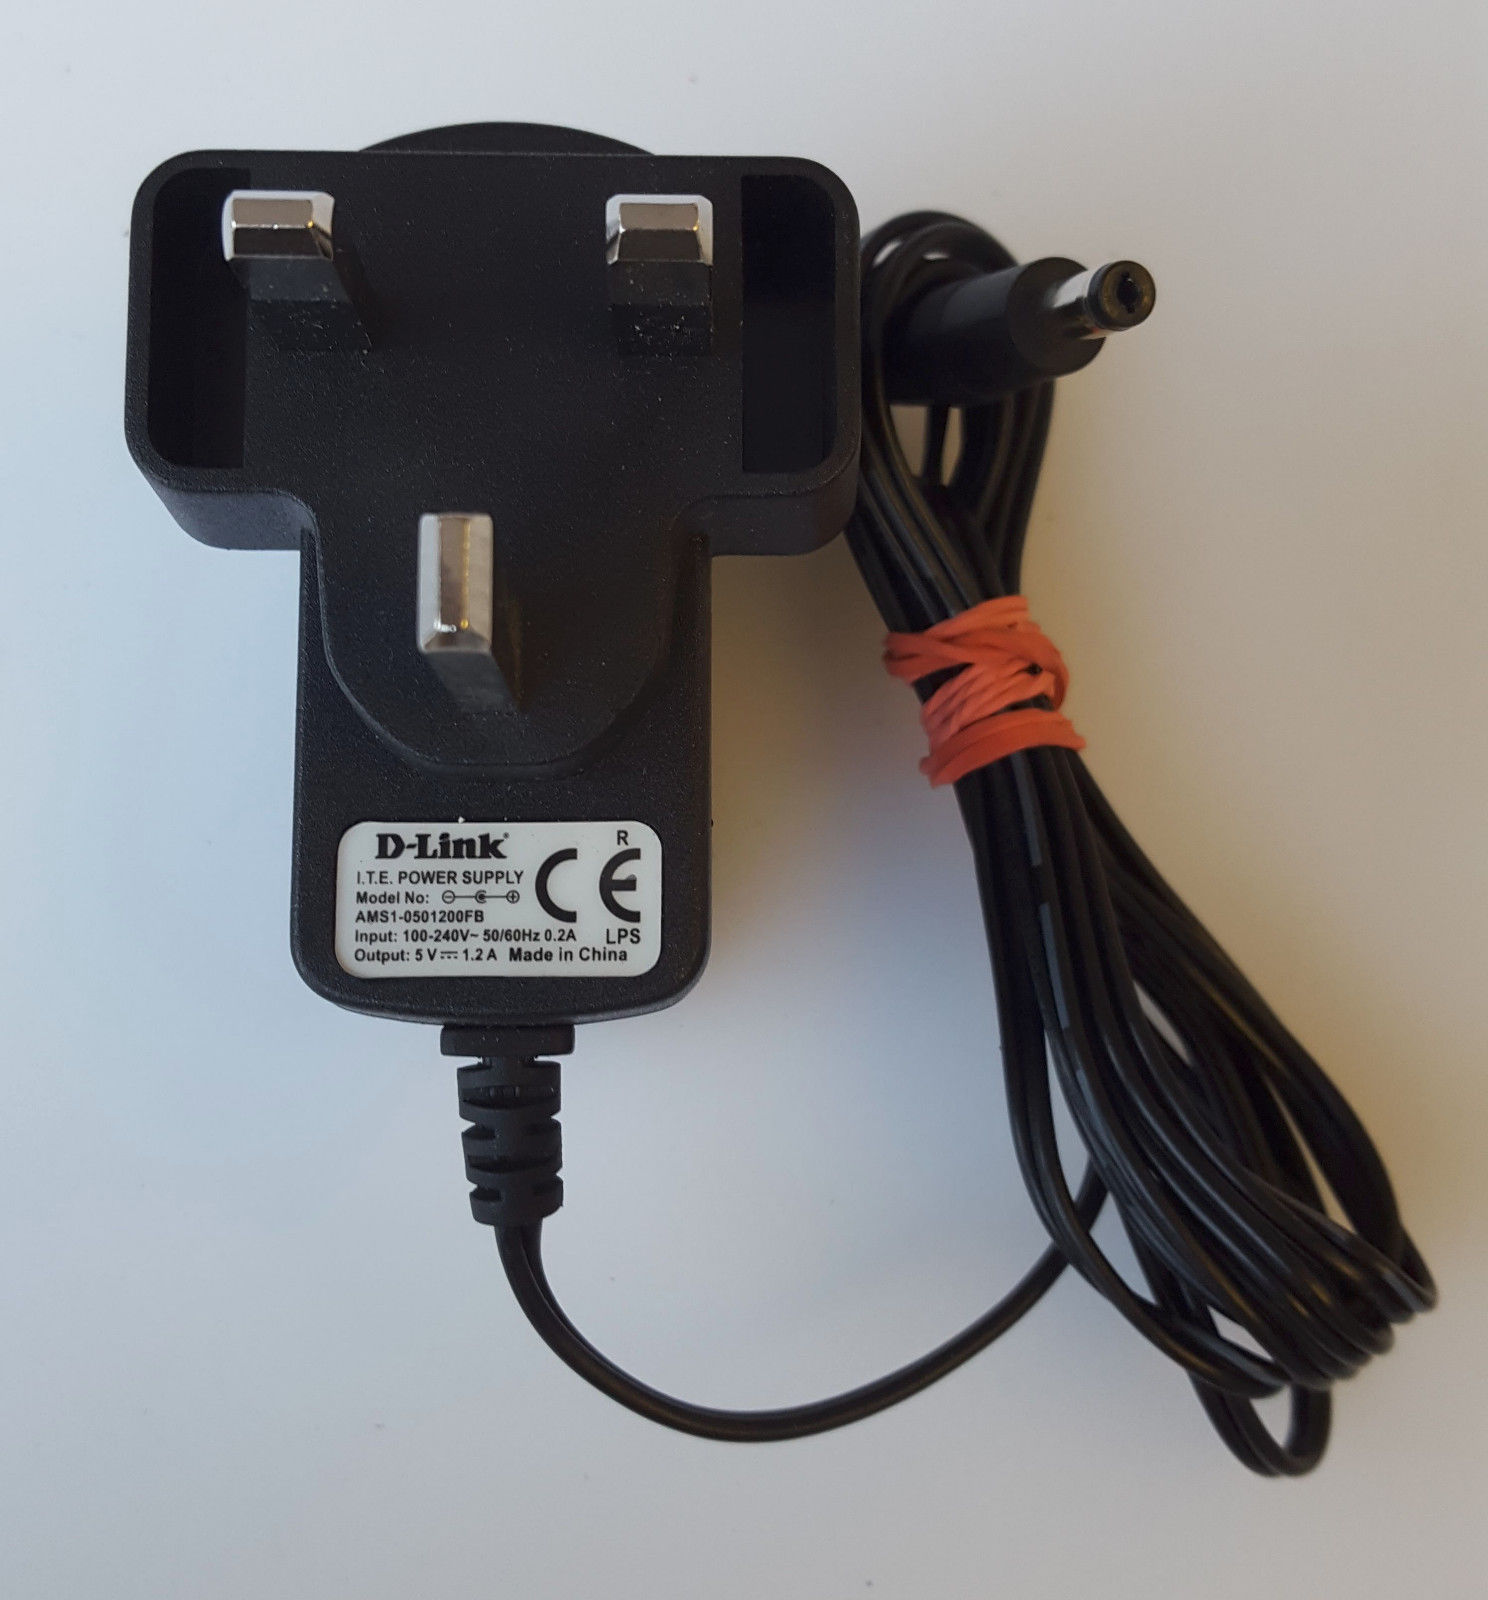 New 5V 1.2A UK PLUG D-LINK AMS1-0501200FB Power Supply Ac Adapter